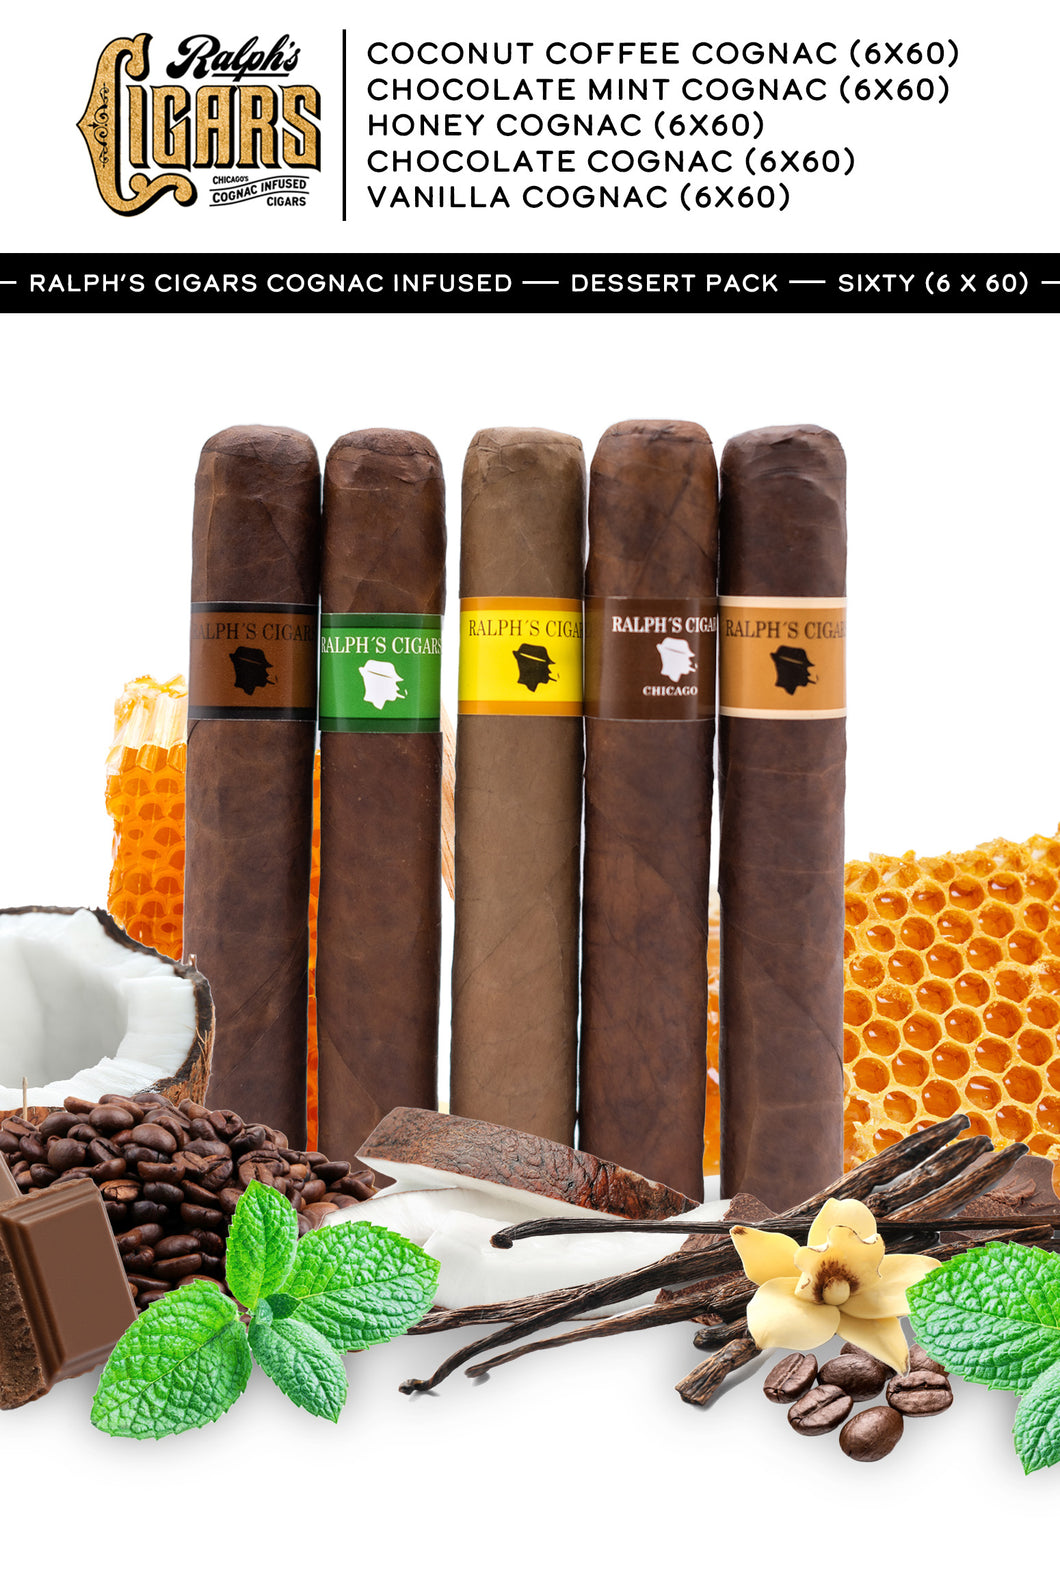 Ralph's Cigars Cognac Infused: Dessert Pack